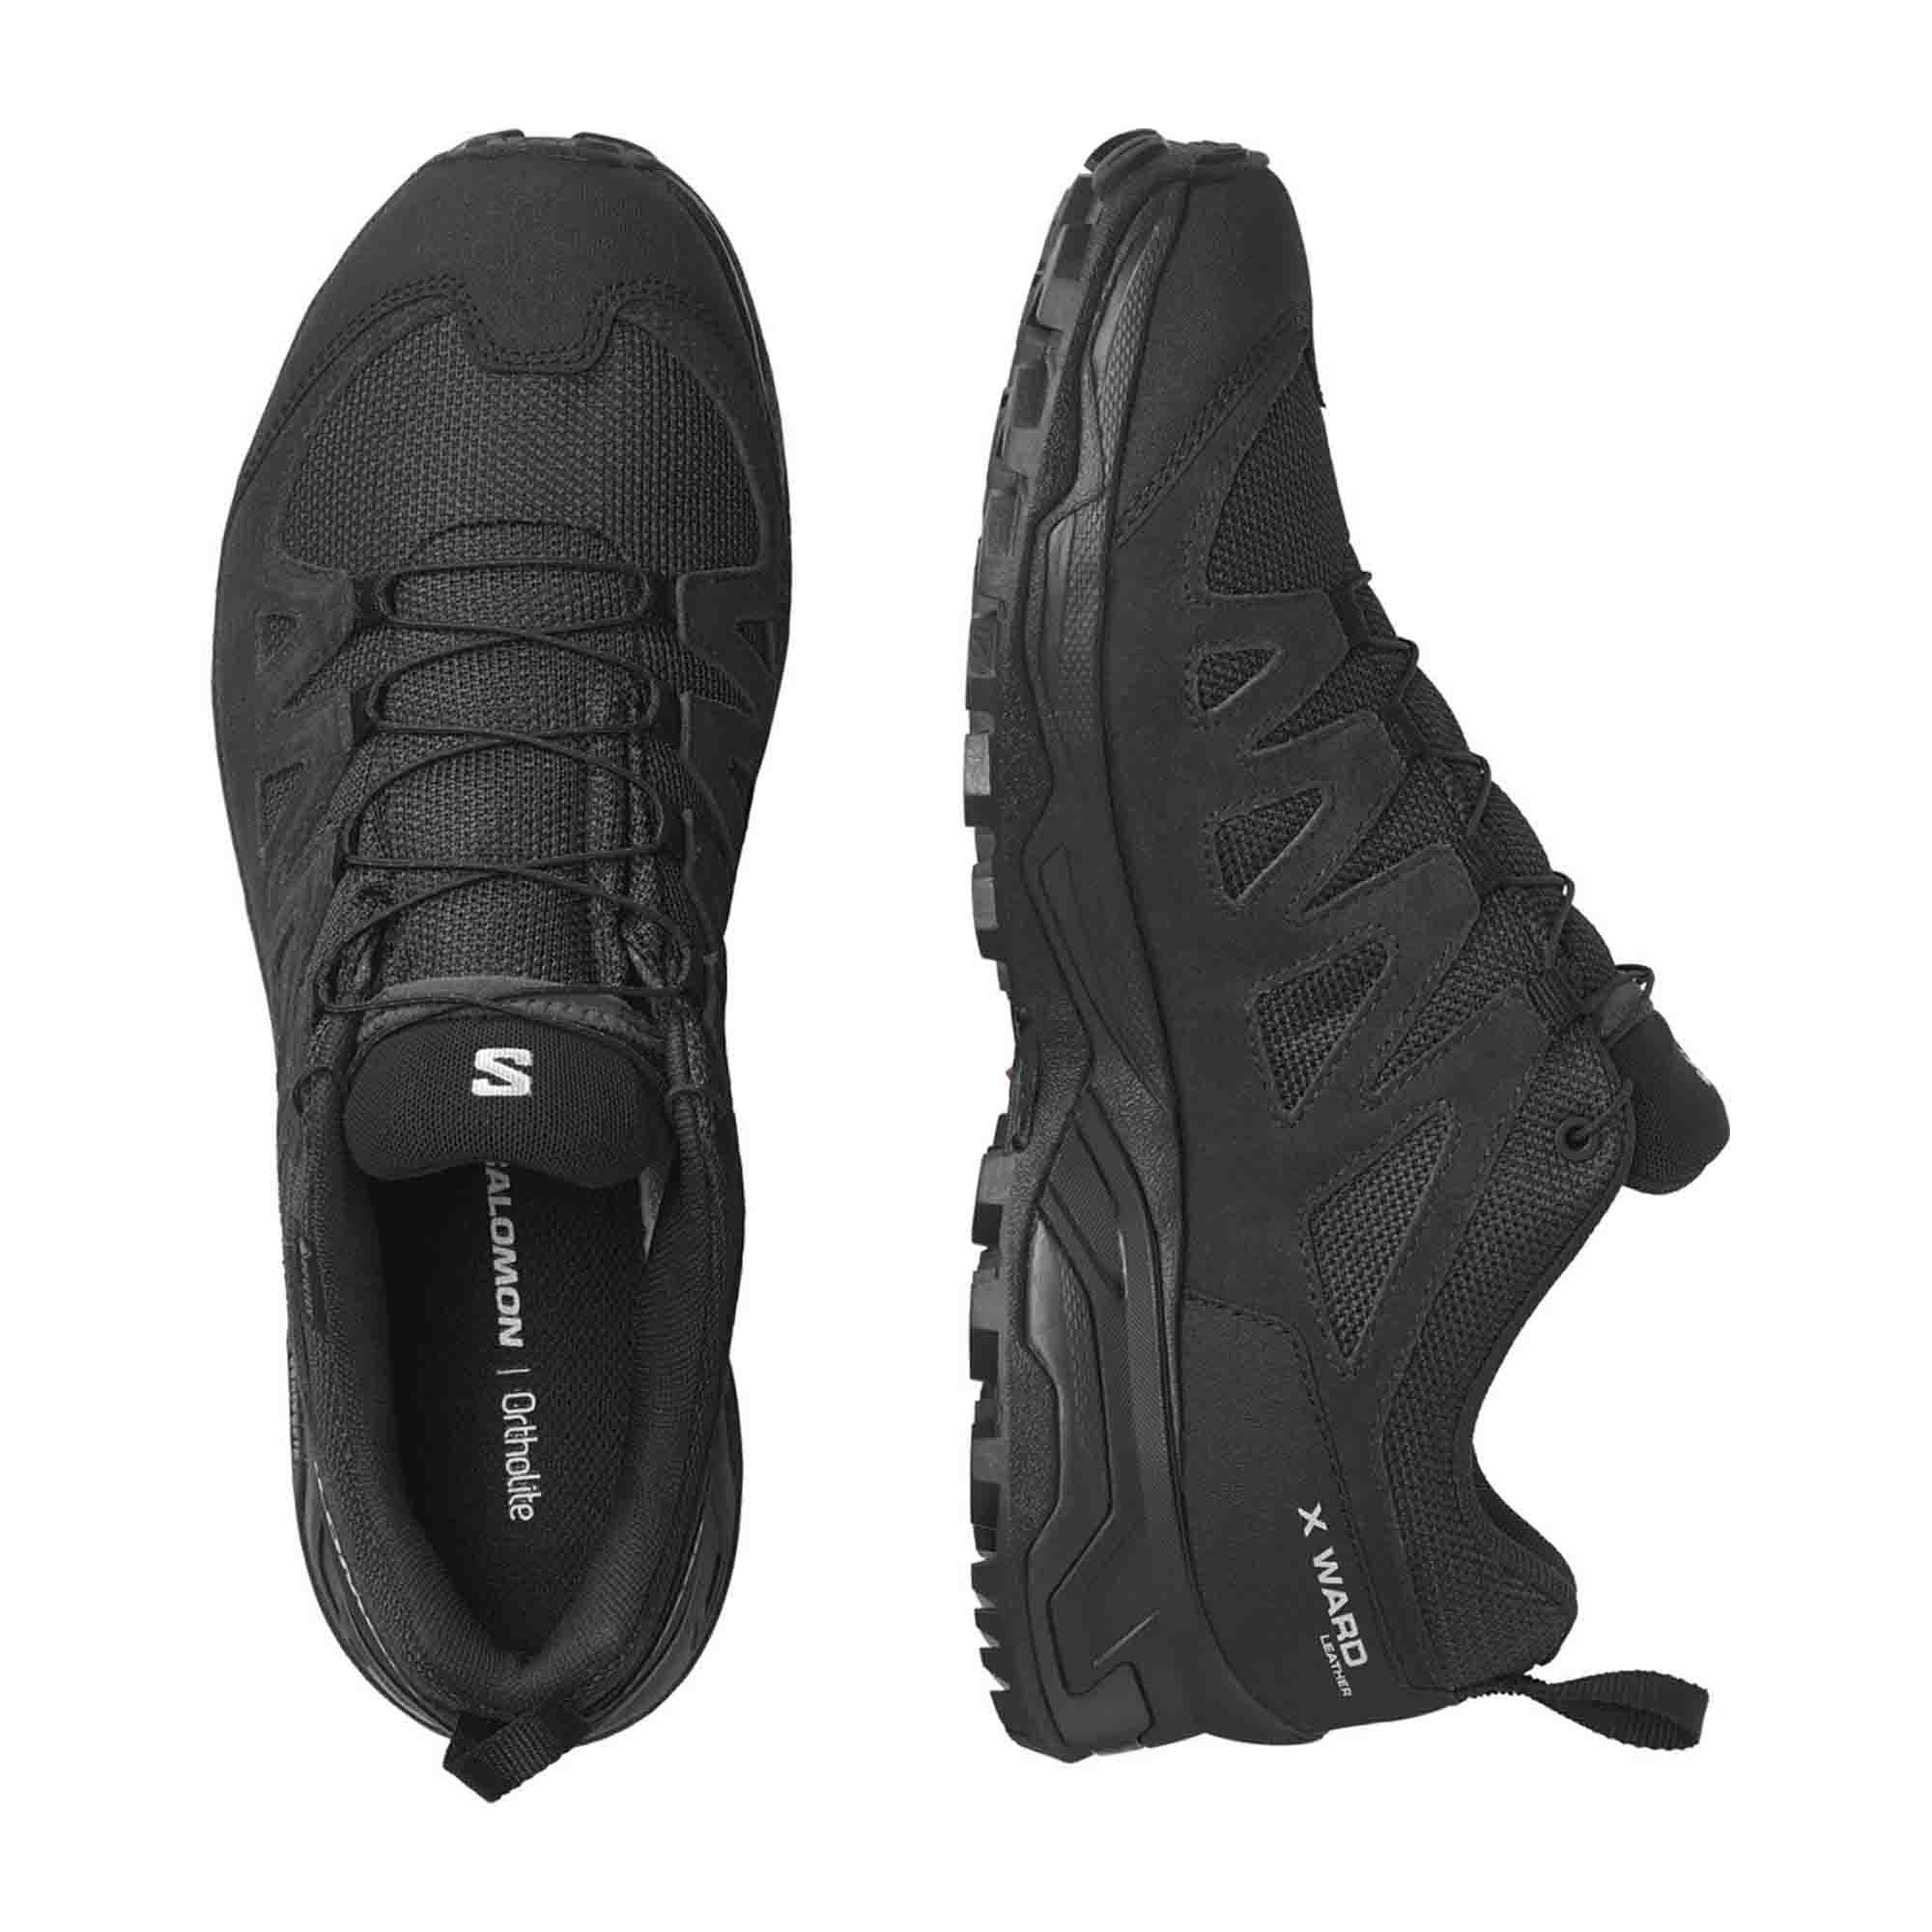 Salomon shoes X WARD LEATHER GTX Vinkha/Bl for men, black